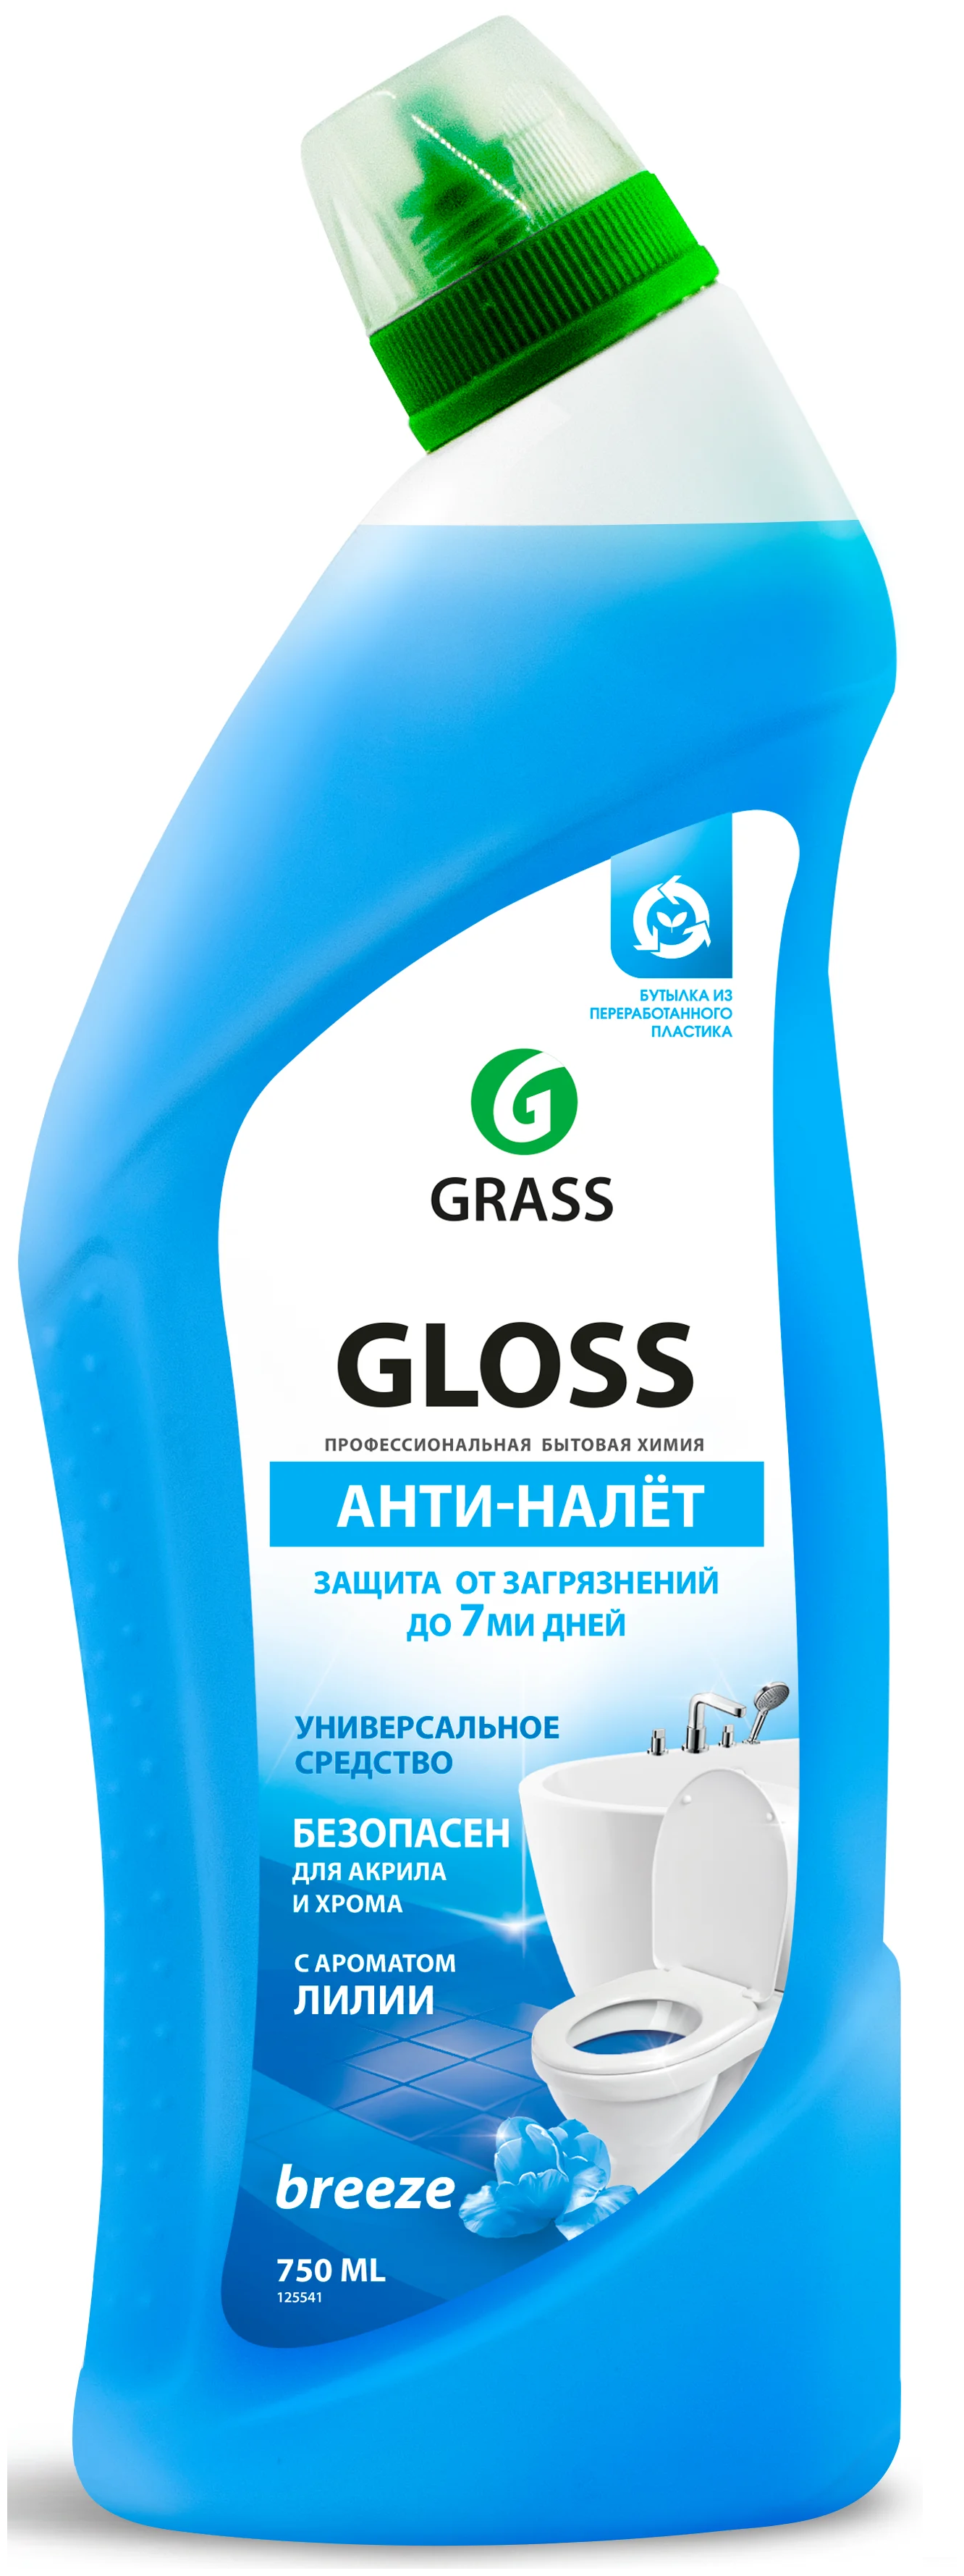 Grass Чистящий гель для ванны и туалета Gloss breeze, 750 мл.